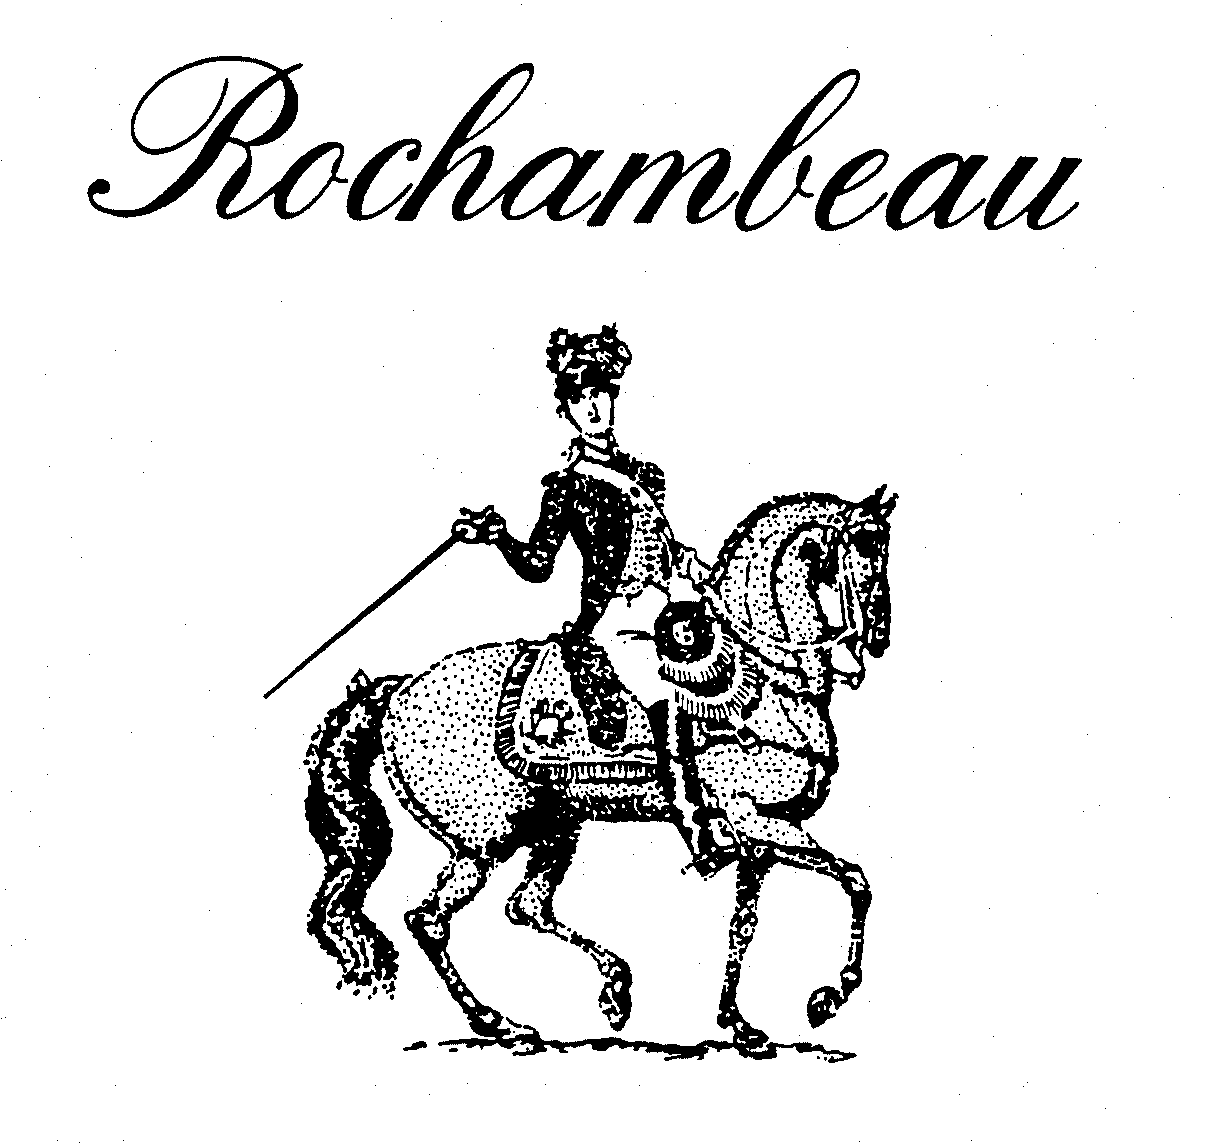 Trademark Logo ROCHAMBEAU